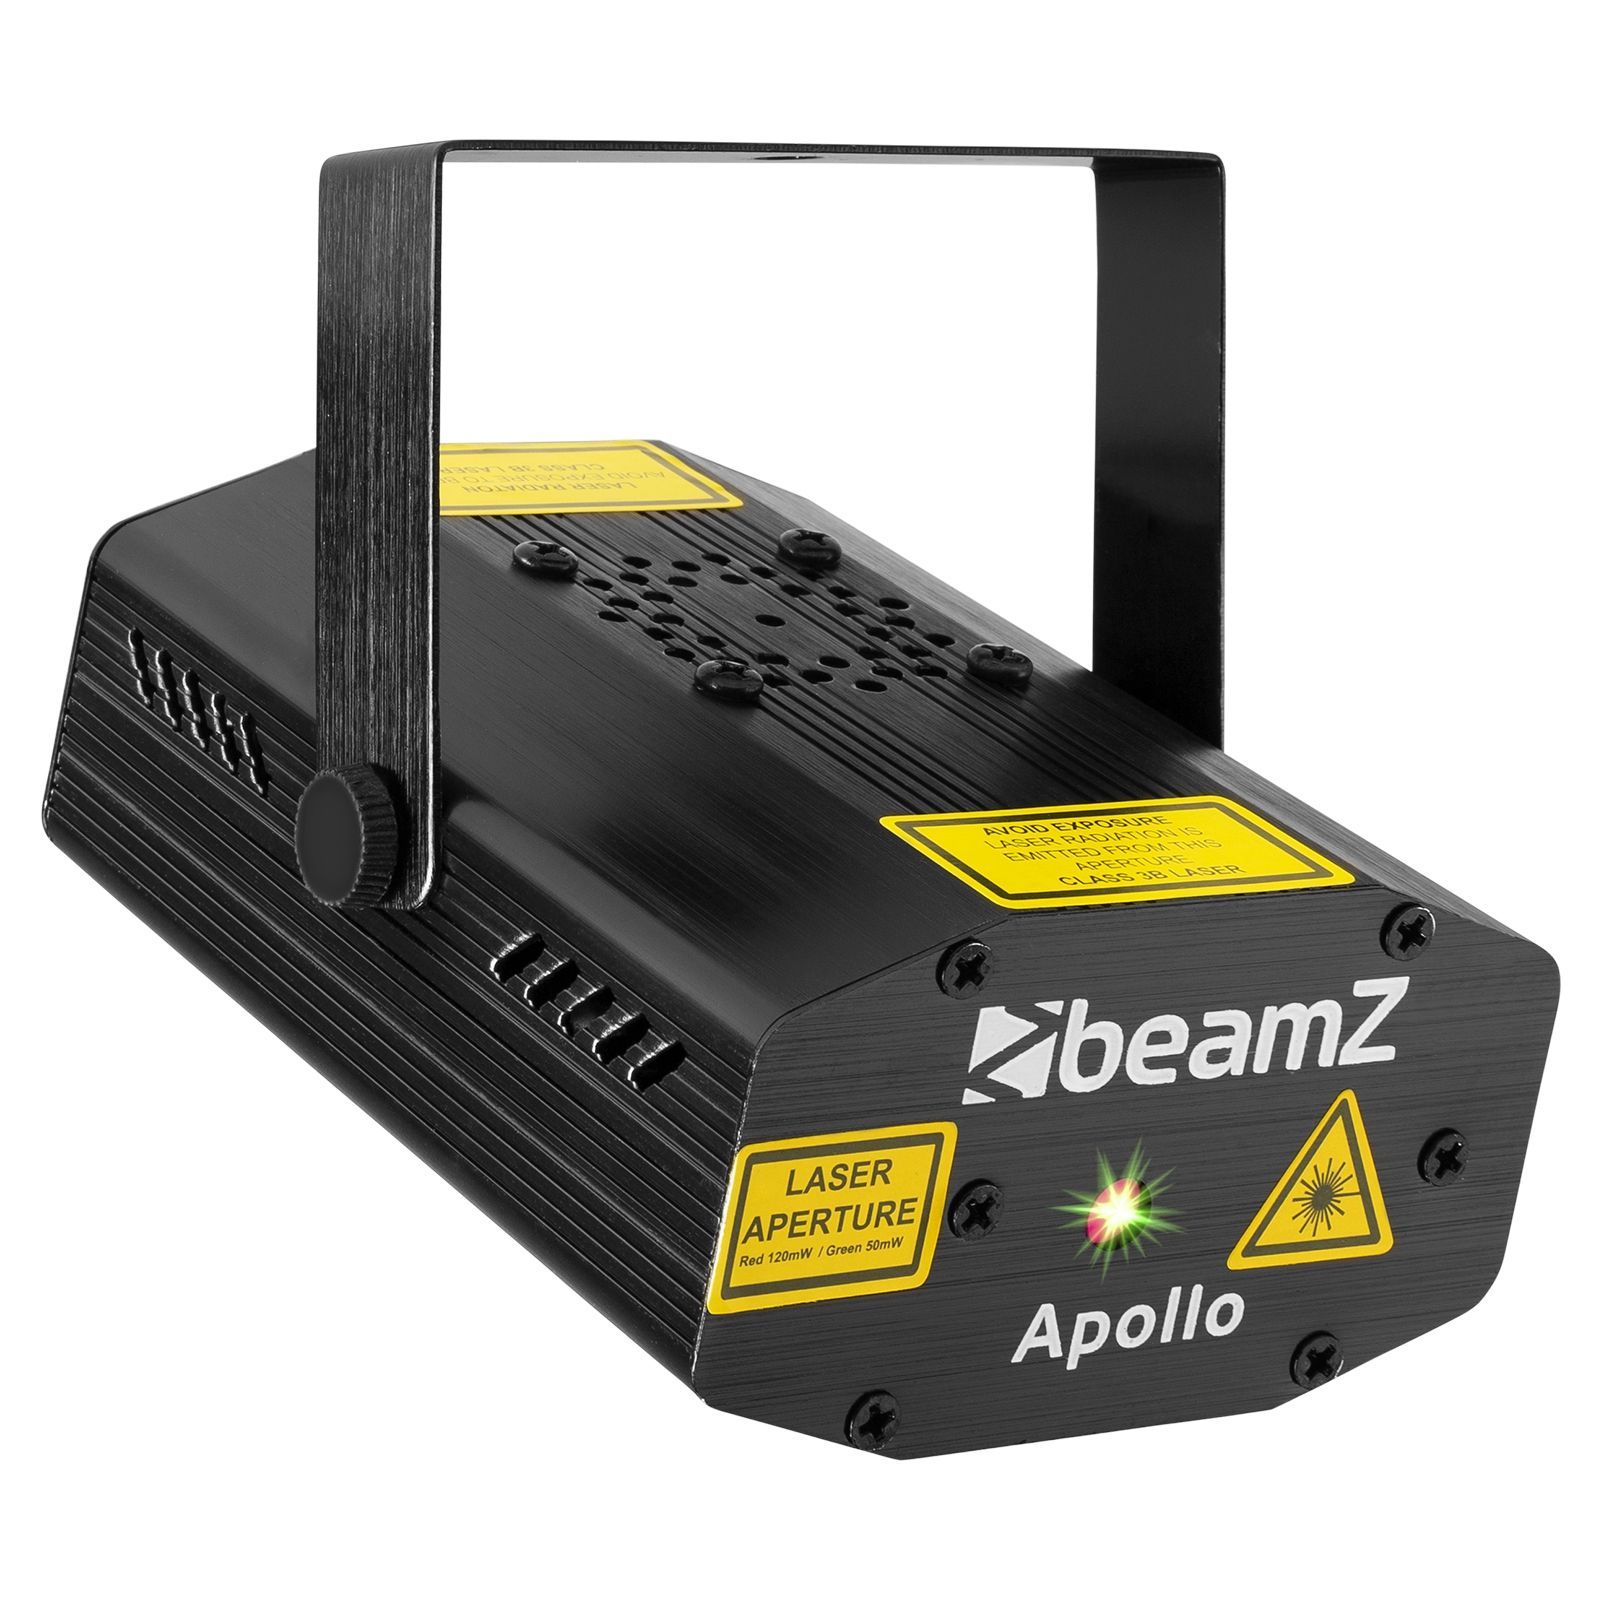 Retourdeal - BeamZ Rood / Groen Apollo Multipoint Laser 170mW